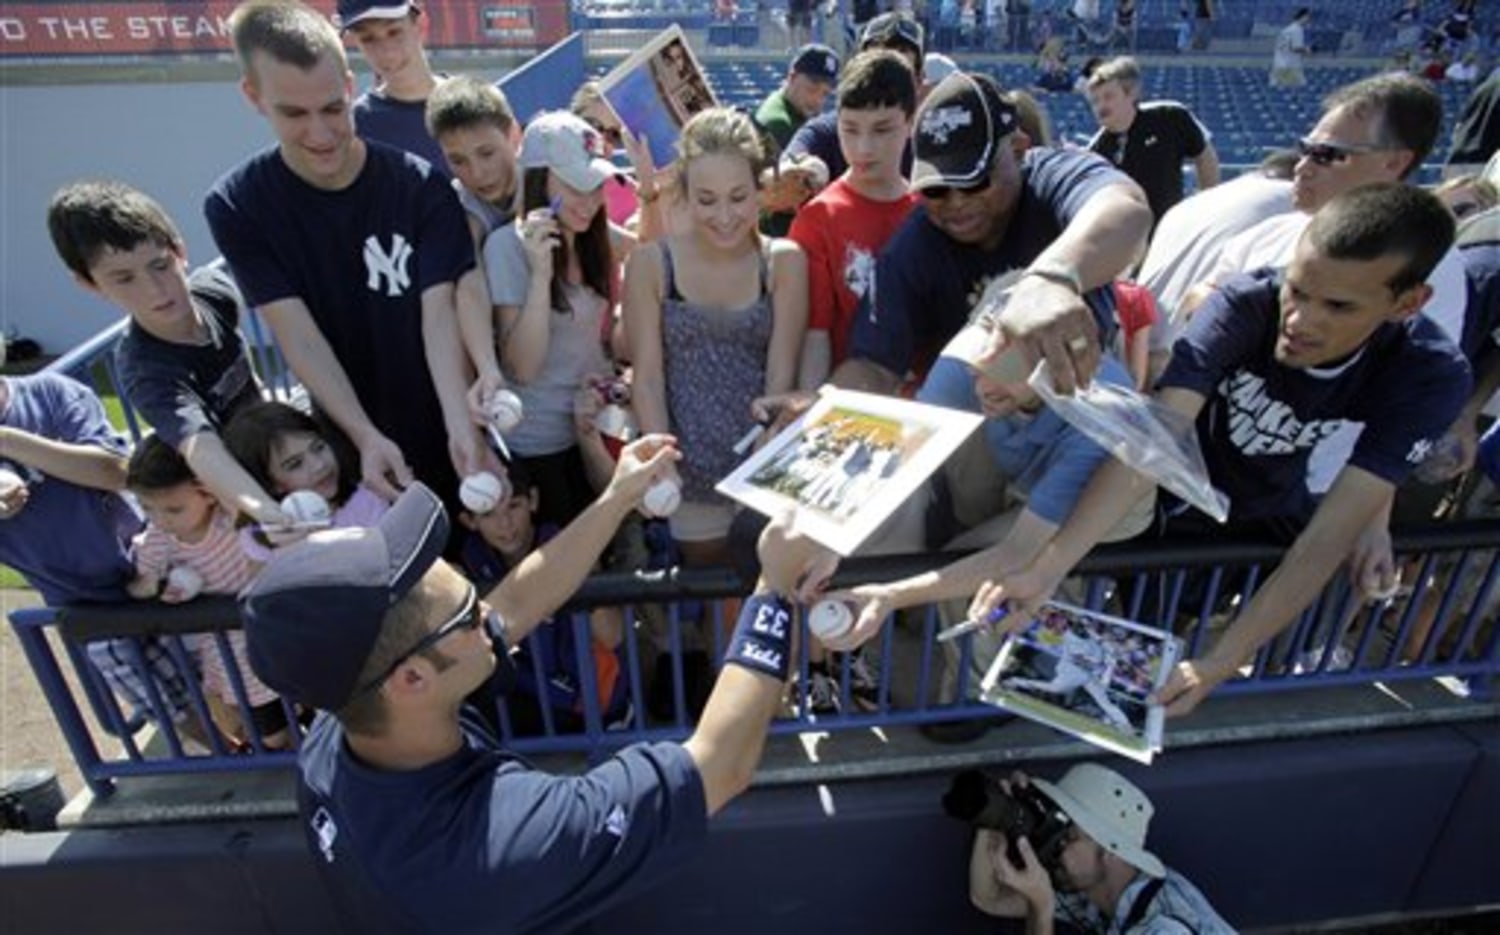 Yankees spring training: Team bonding with Nick Swisher